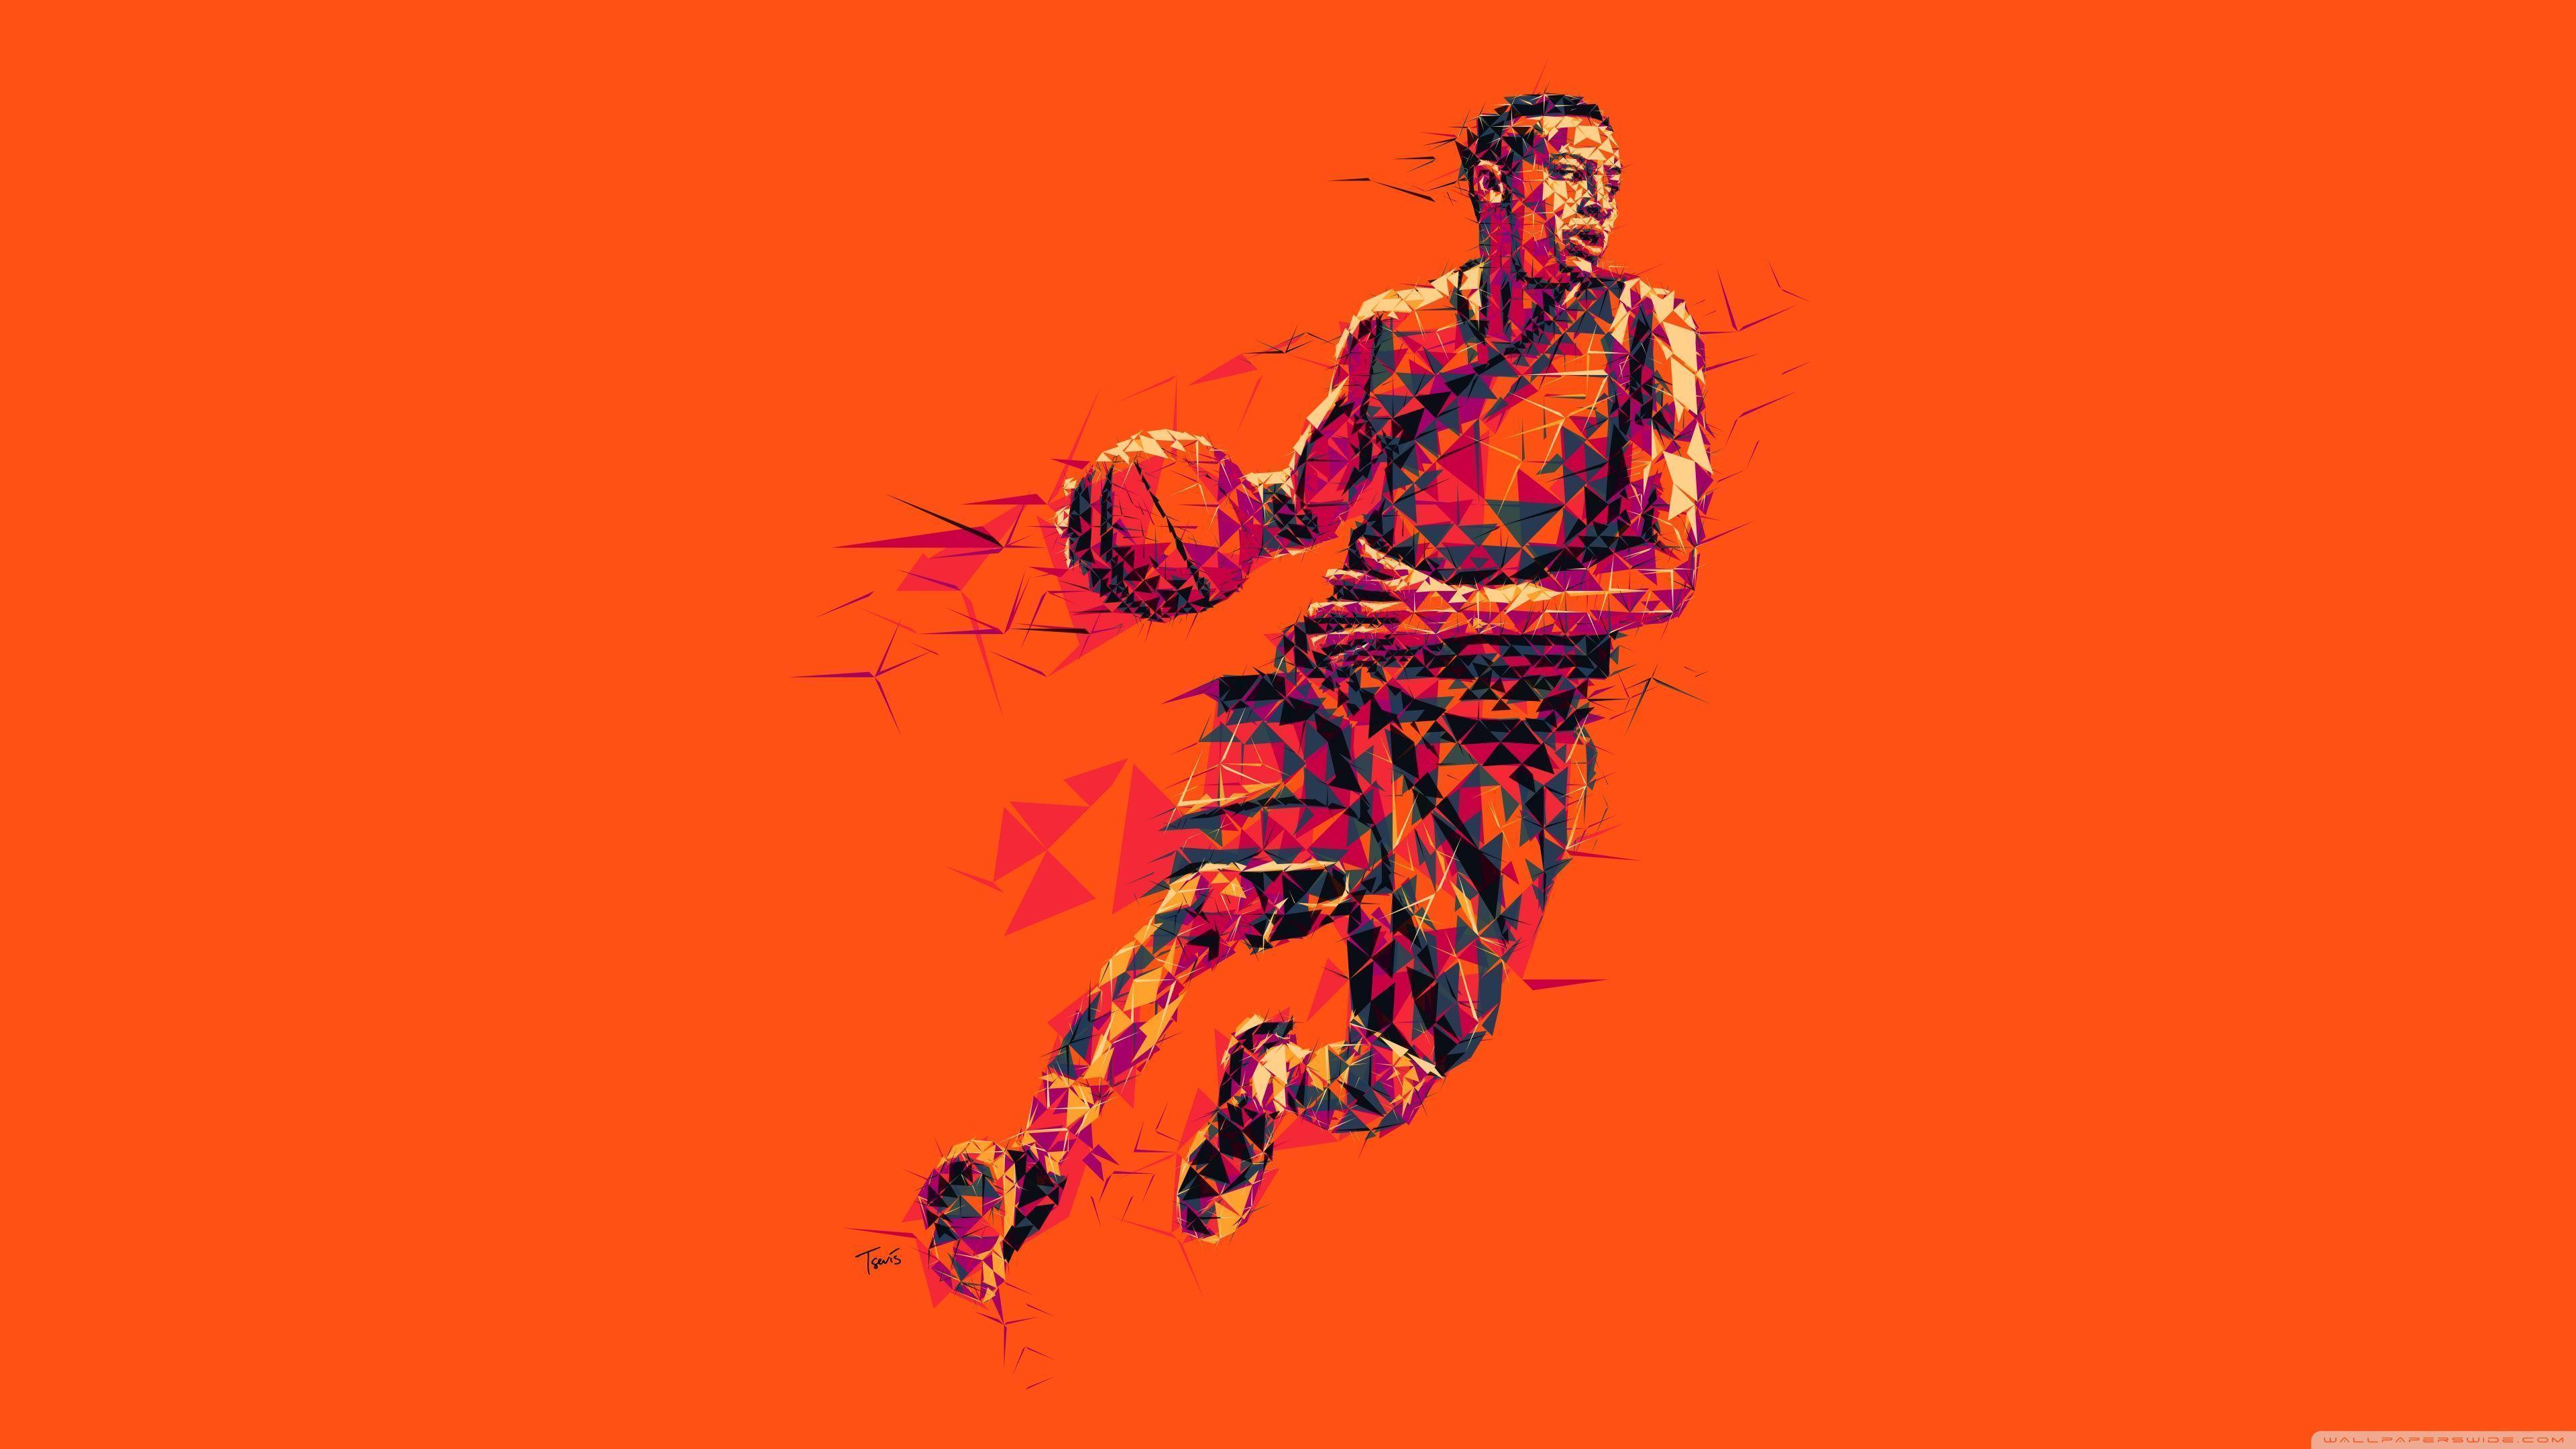 Wallpaper Of Basketball